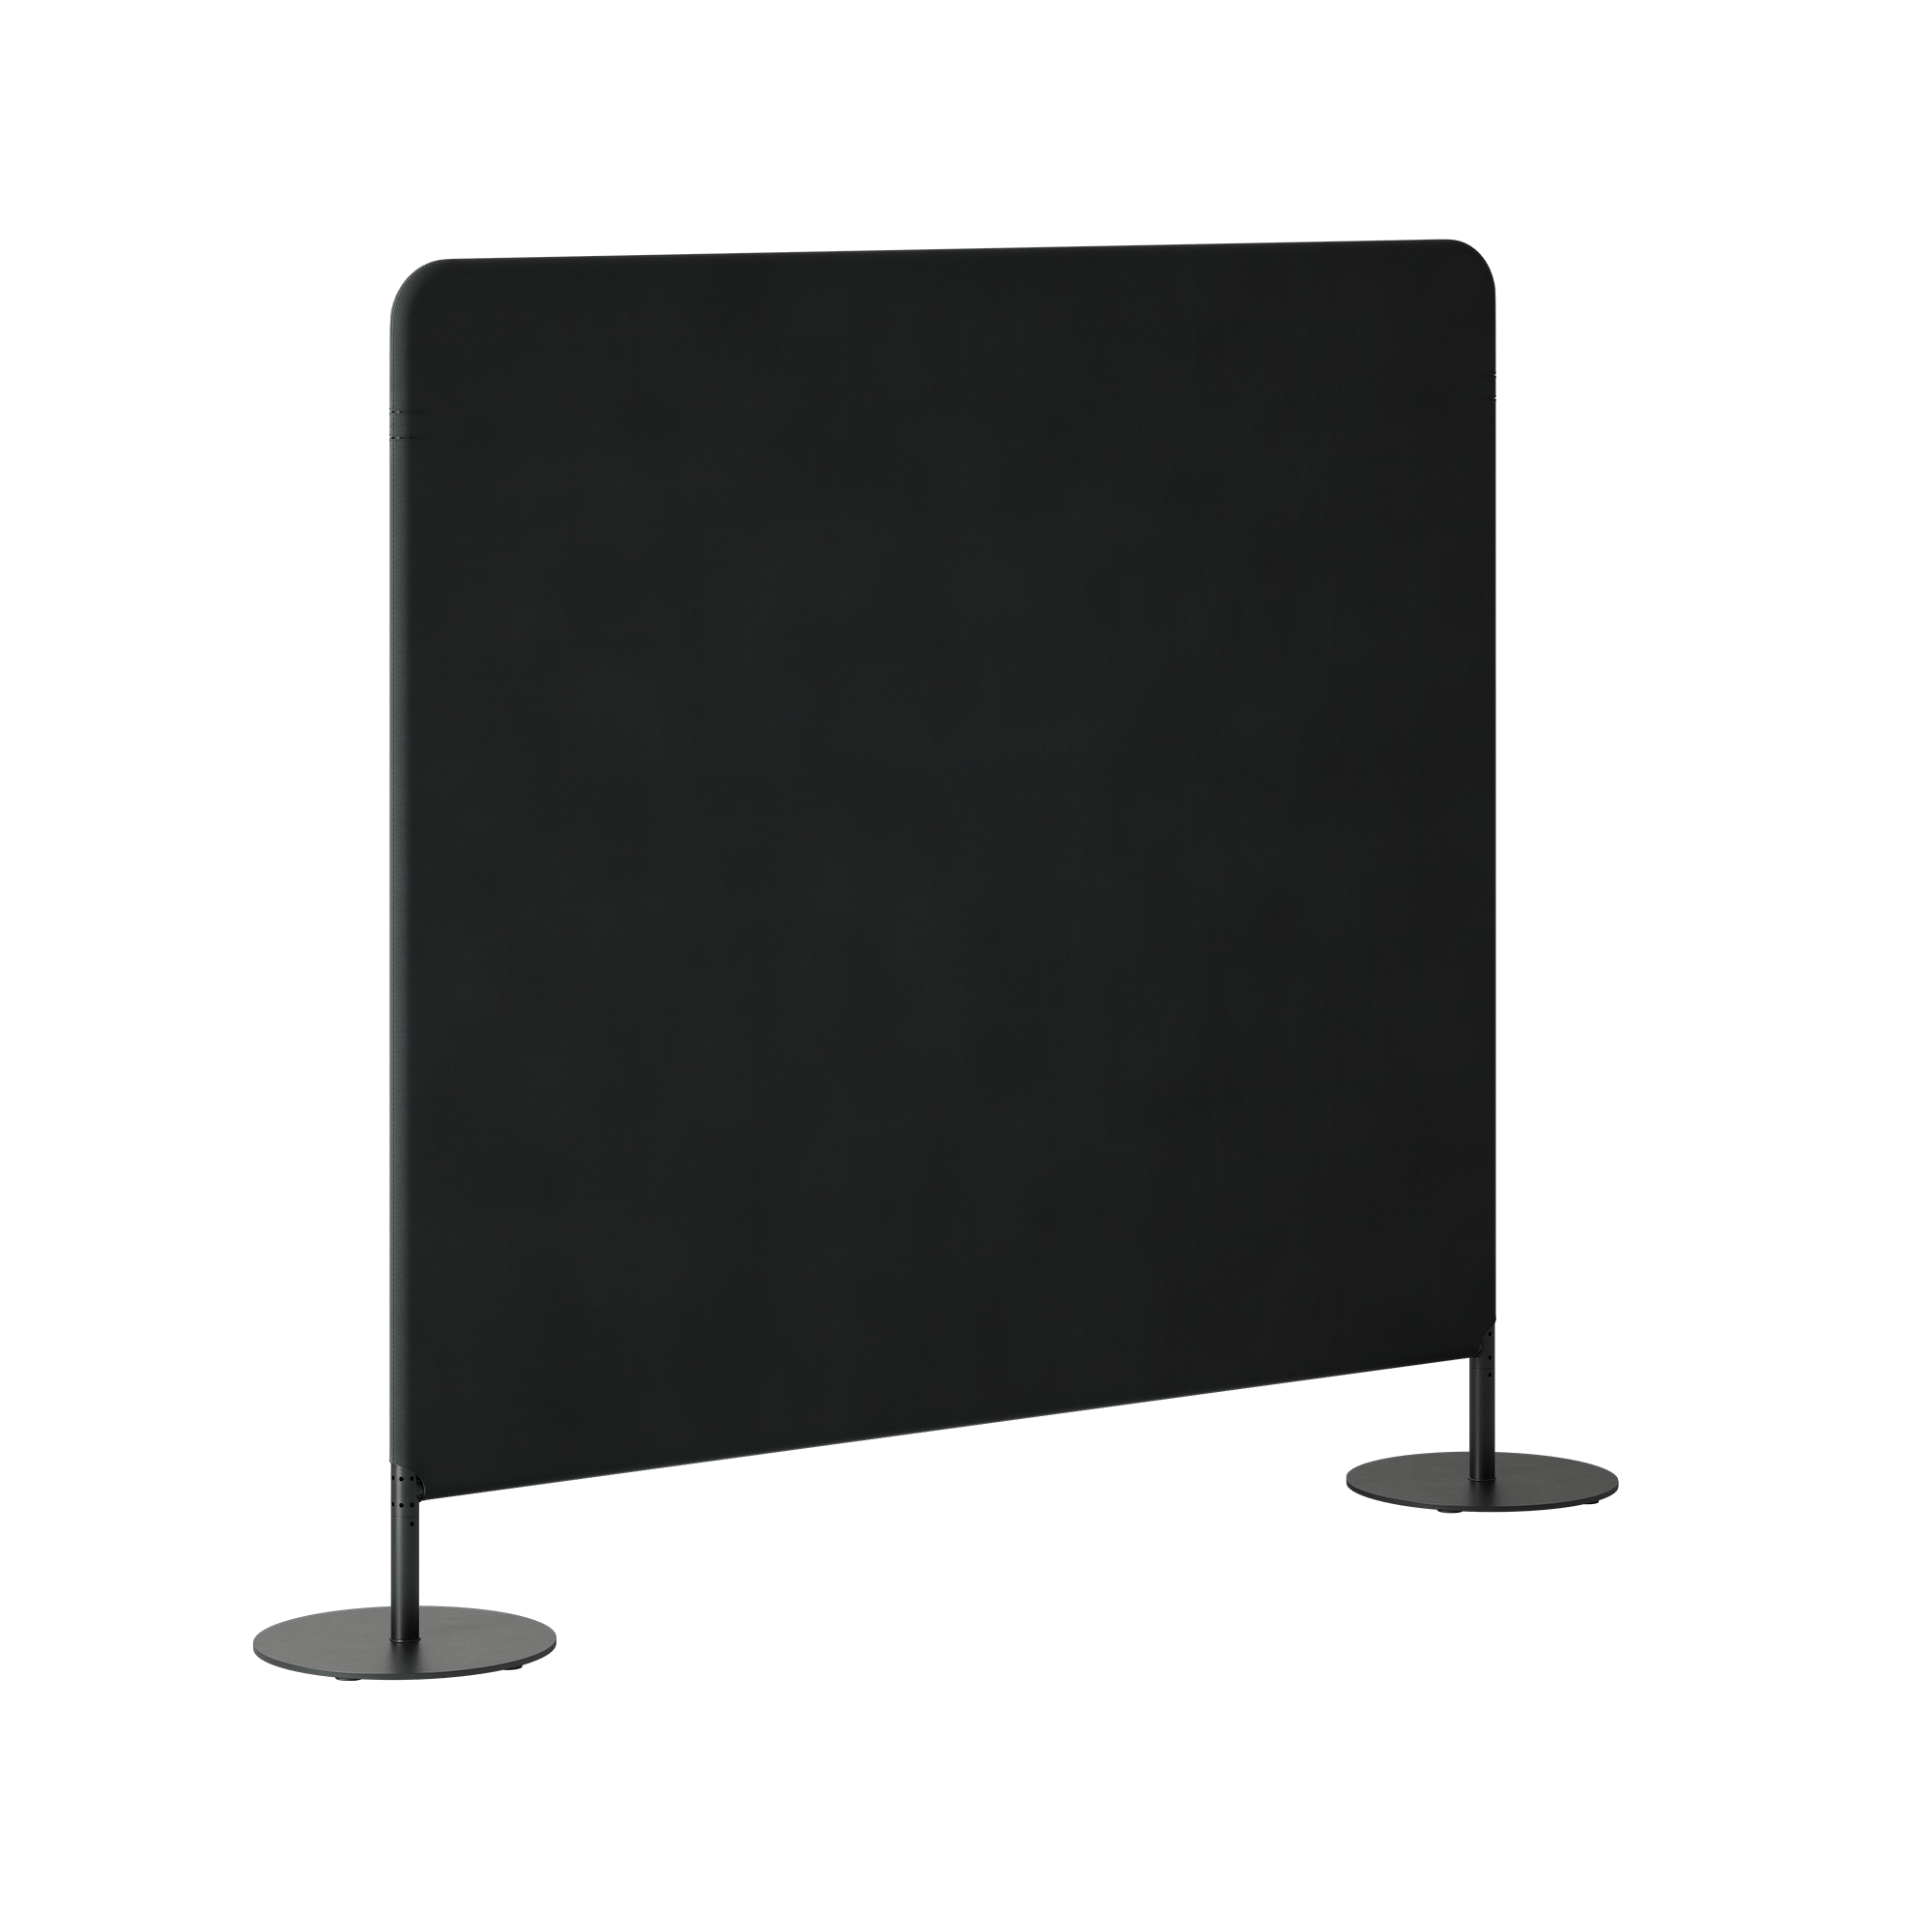 A black office screen divider